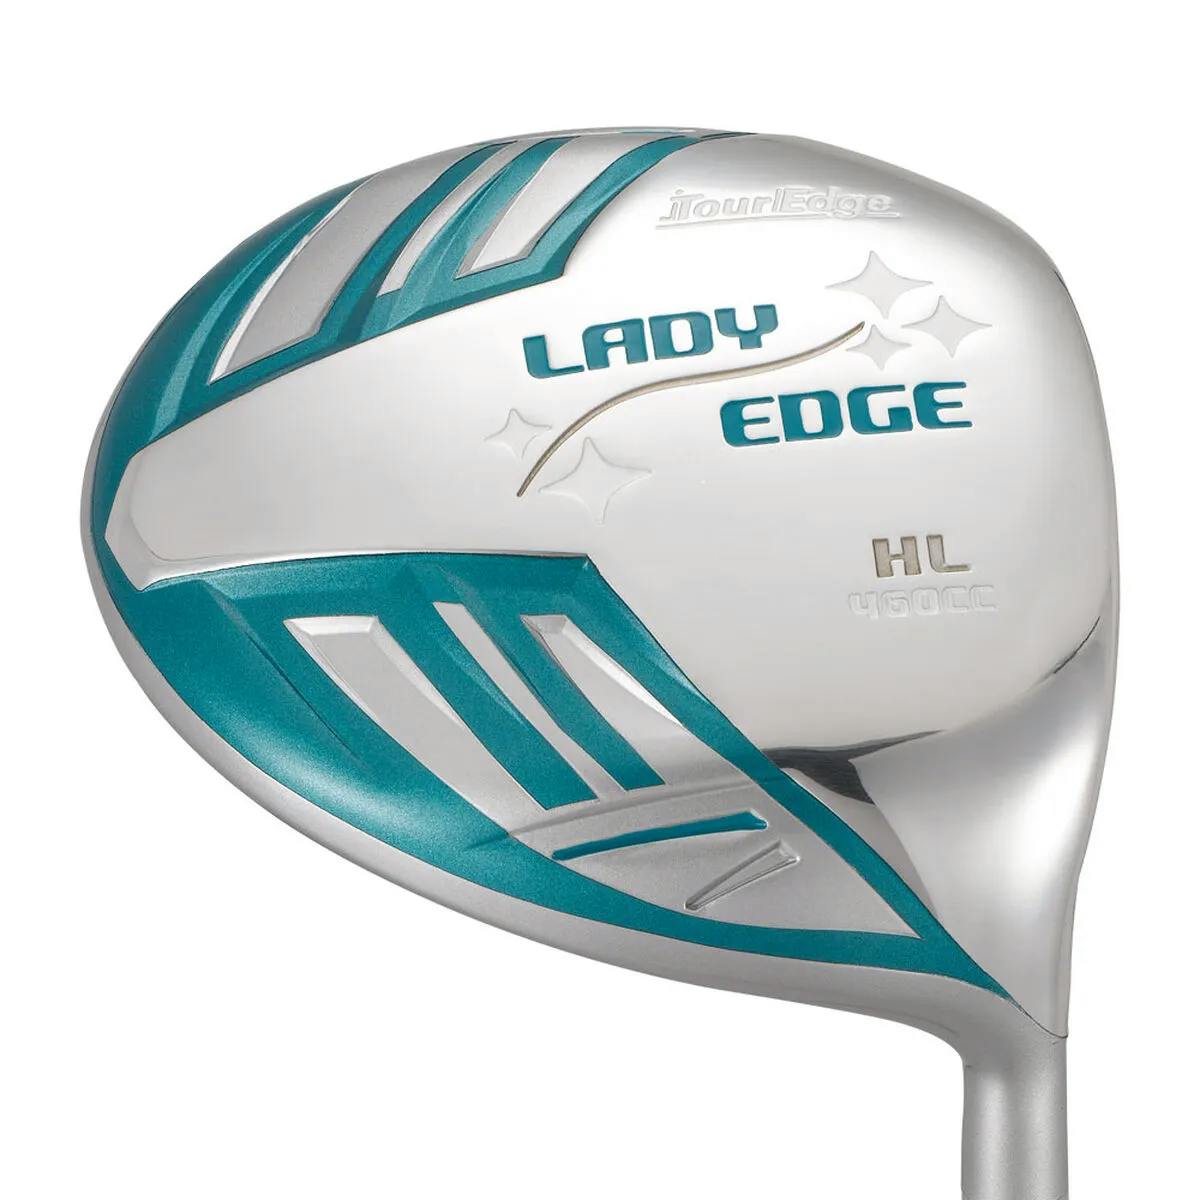 Tour Edge Lady Edge Women's Full Set · Right handed · Graphite · Ladies · Standard · Turquoise/White